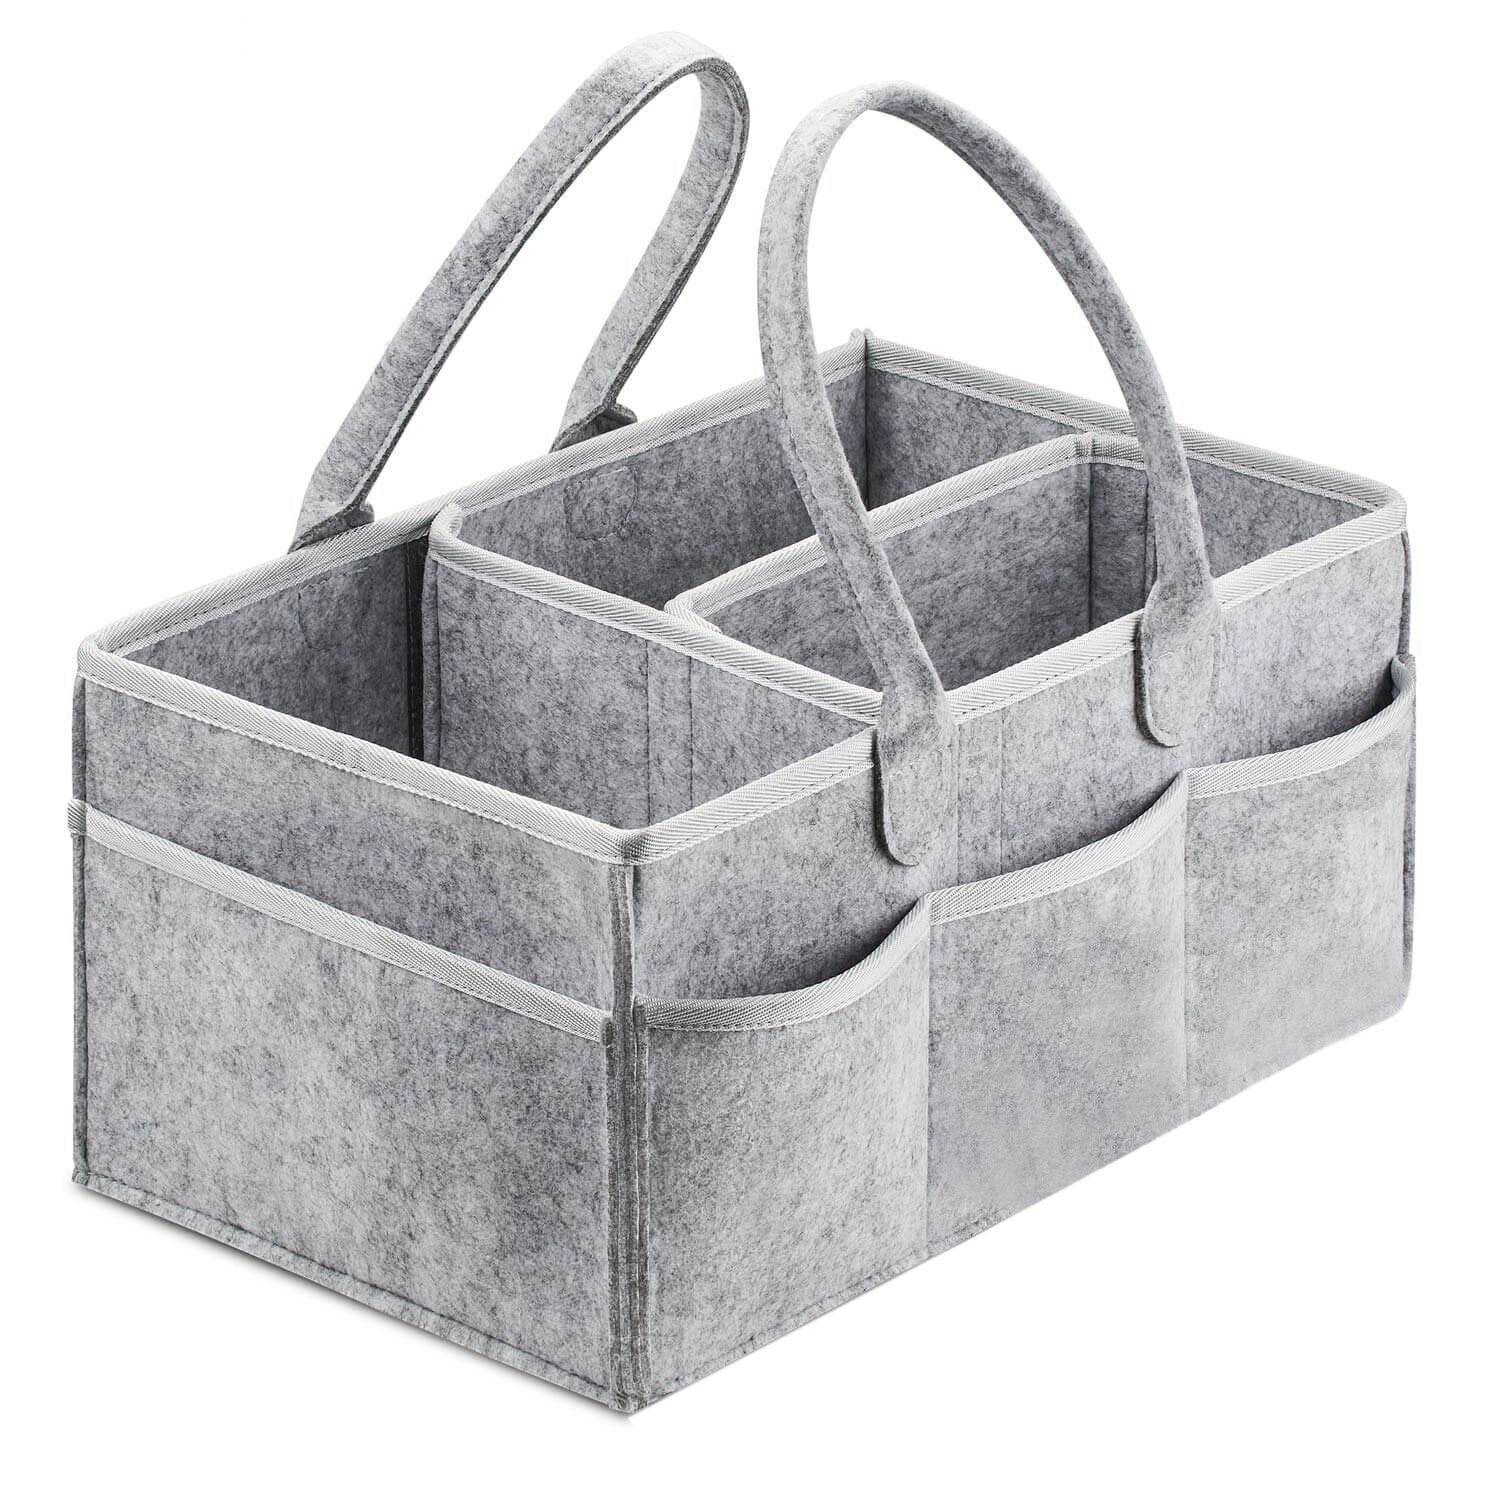 incarpo Baby Storage Basket Foldable Diaper Caddy Organiser Portable Large Nursery Bag Shower Gift Organizer for Boy Girl 